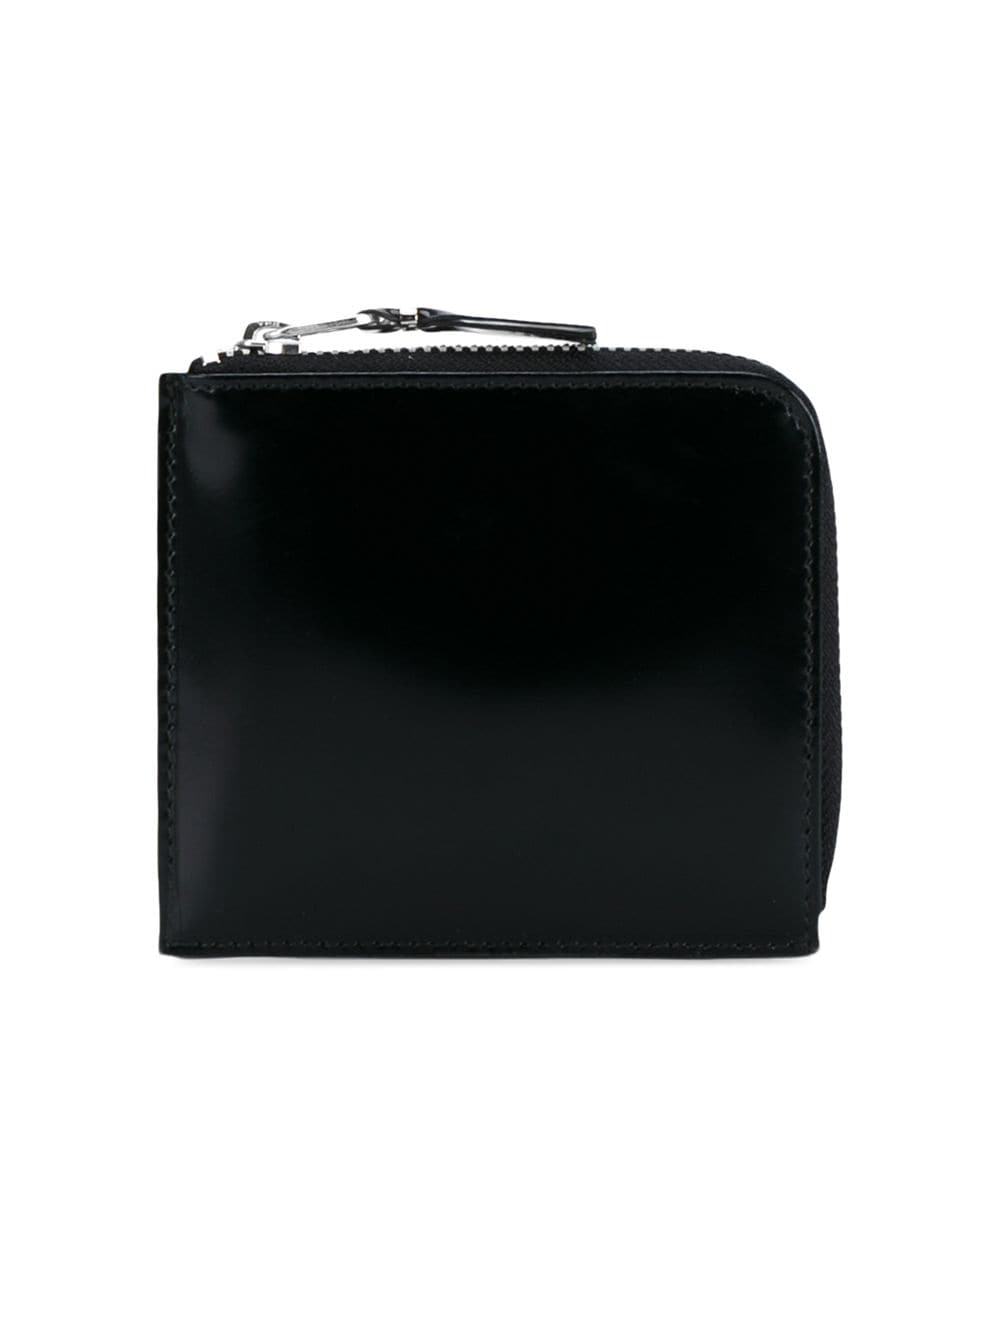 Black leather glossy half-zip wallet